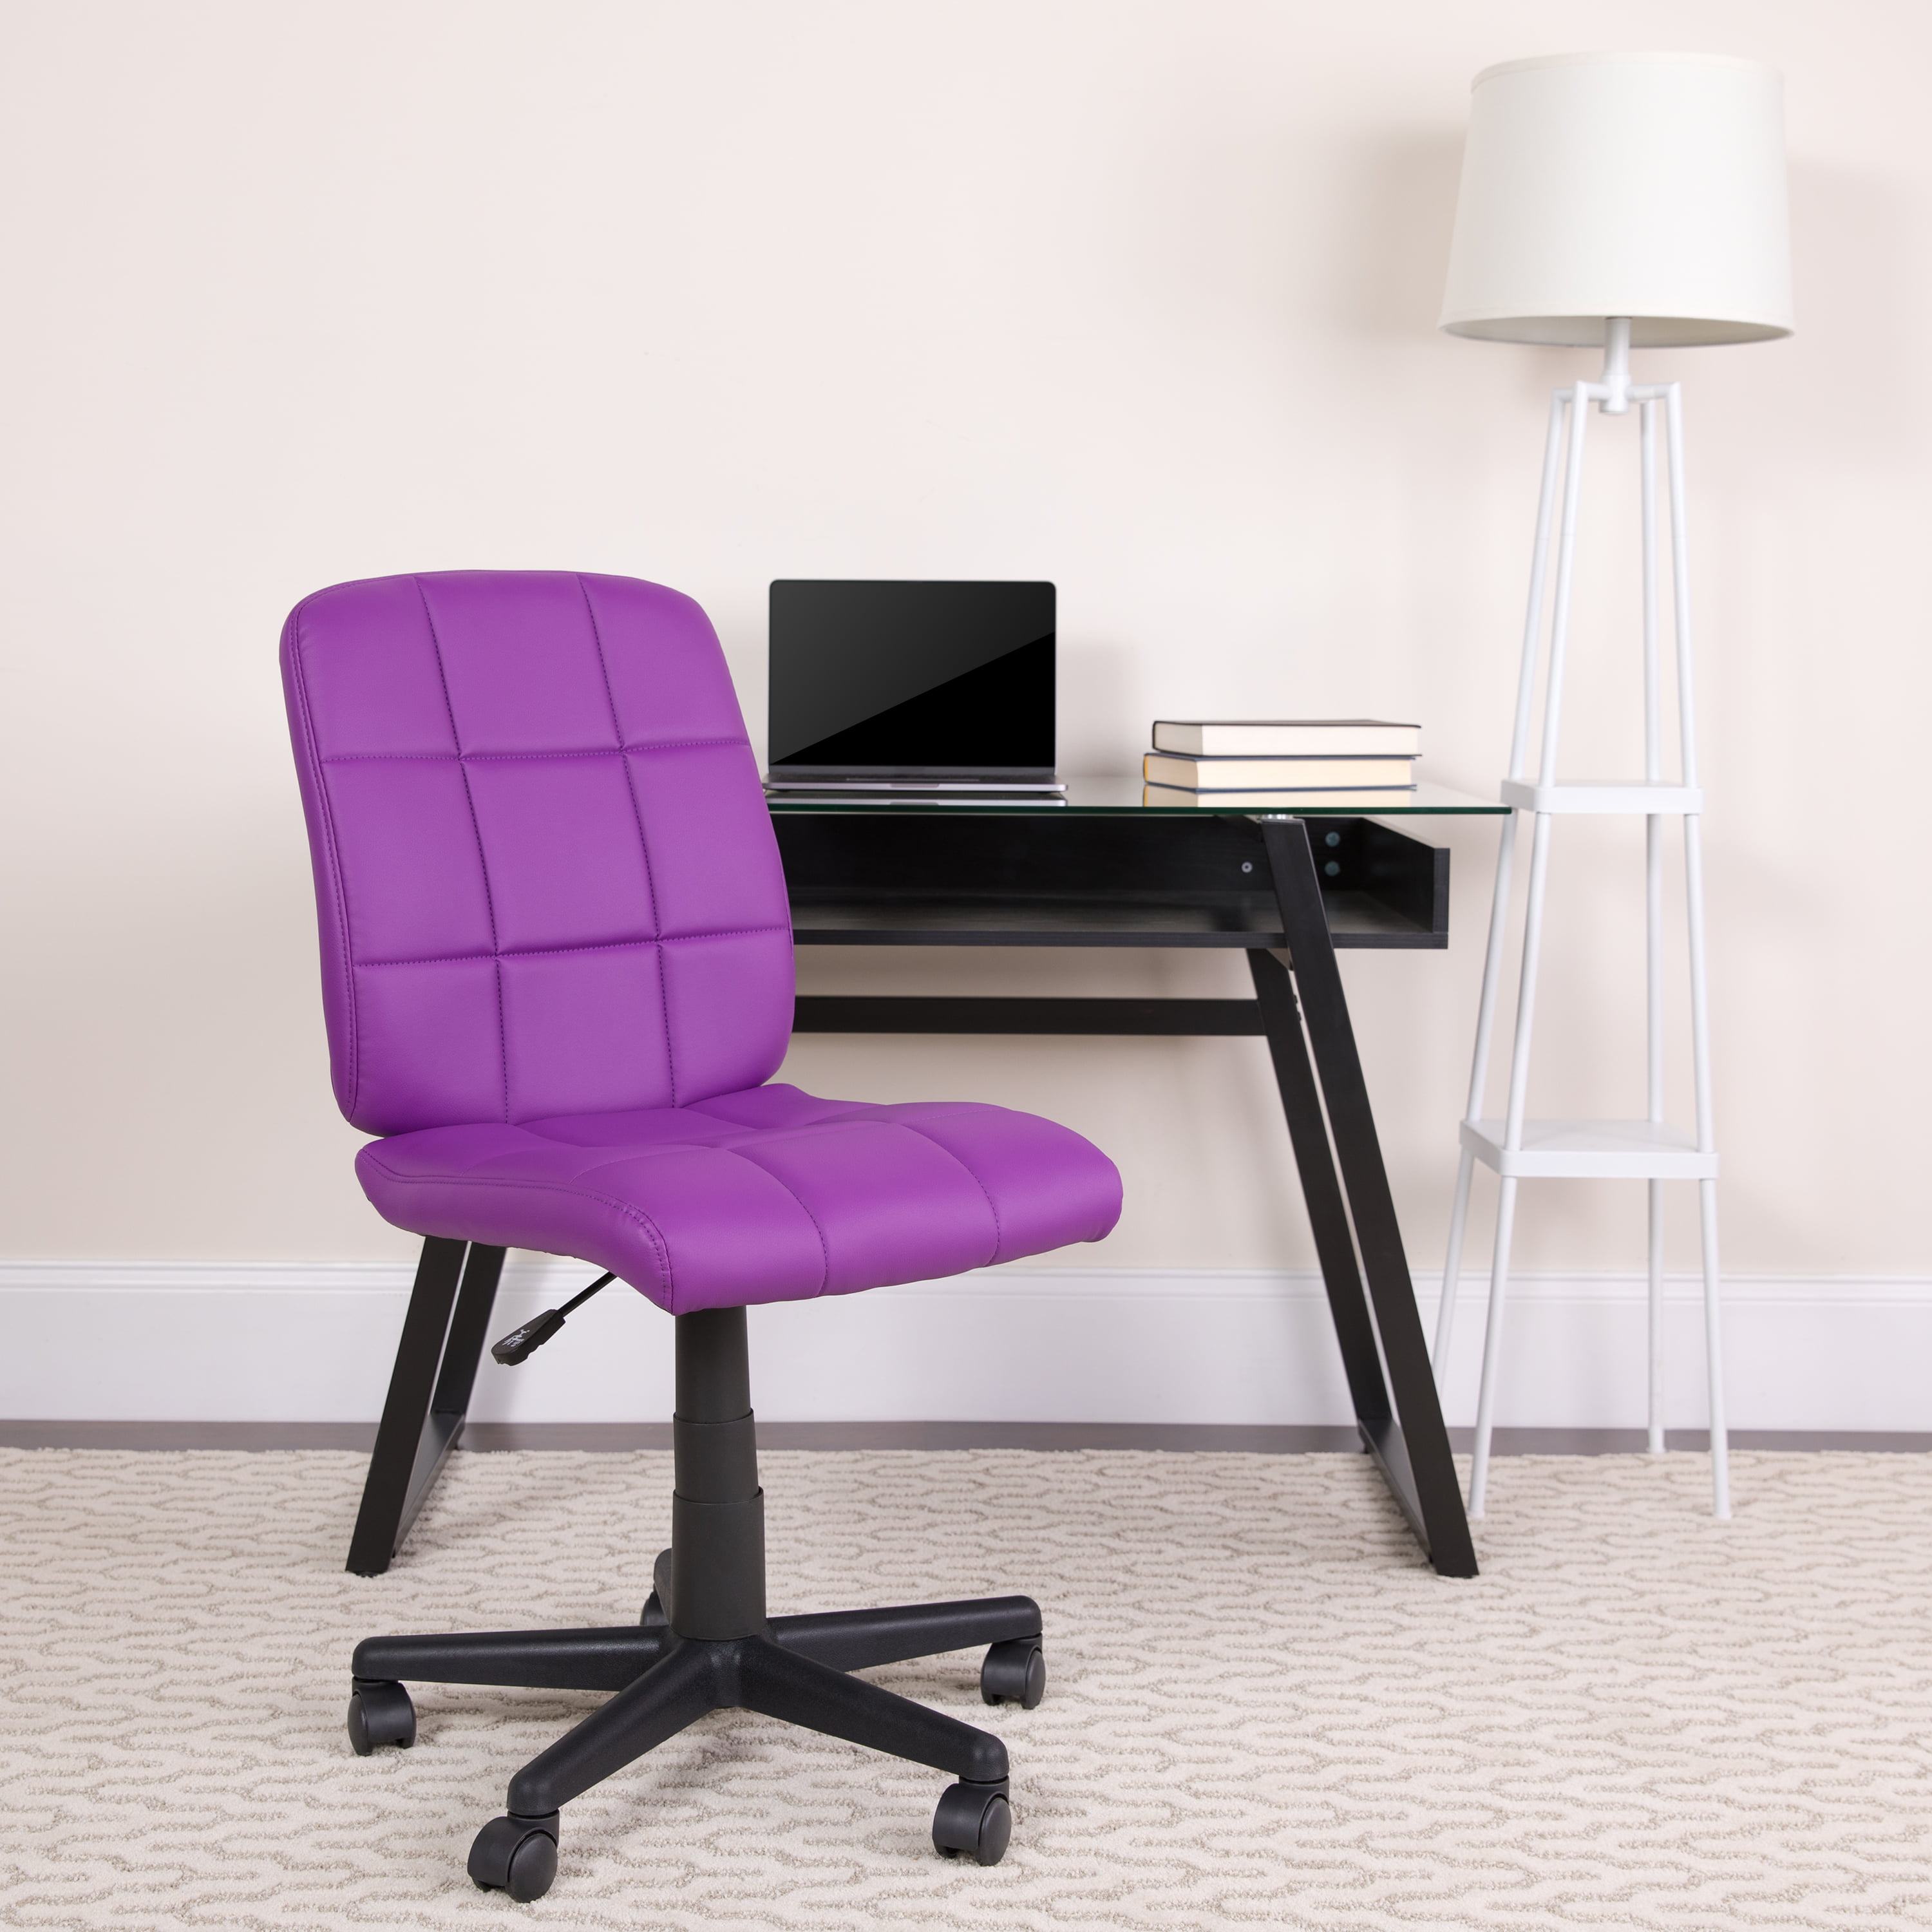 flash furniture ergonomic task office chair in black